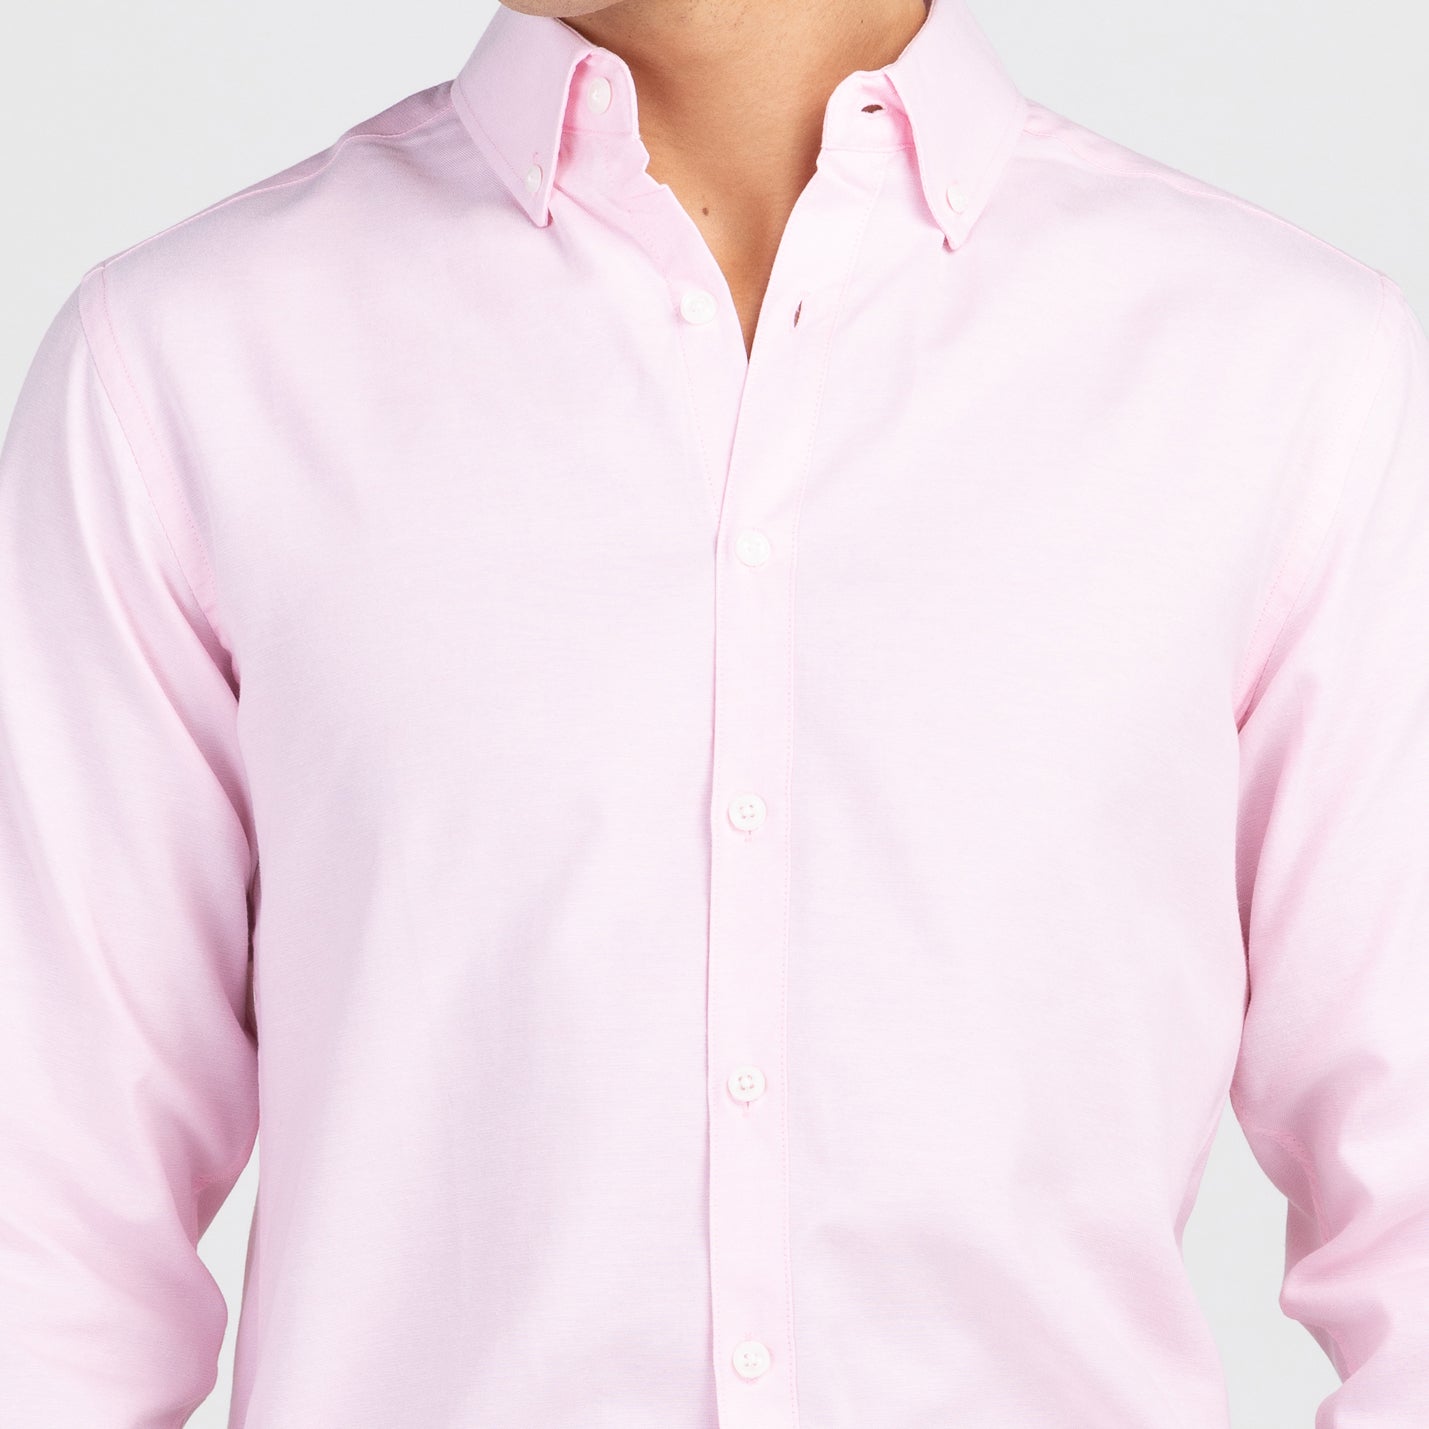 Mens REGULAR FIT Oxford Series Button Down Long Sleeve LIGHT PINK Shirt - IDENTITY Apparel Shop